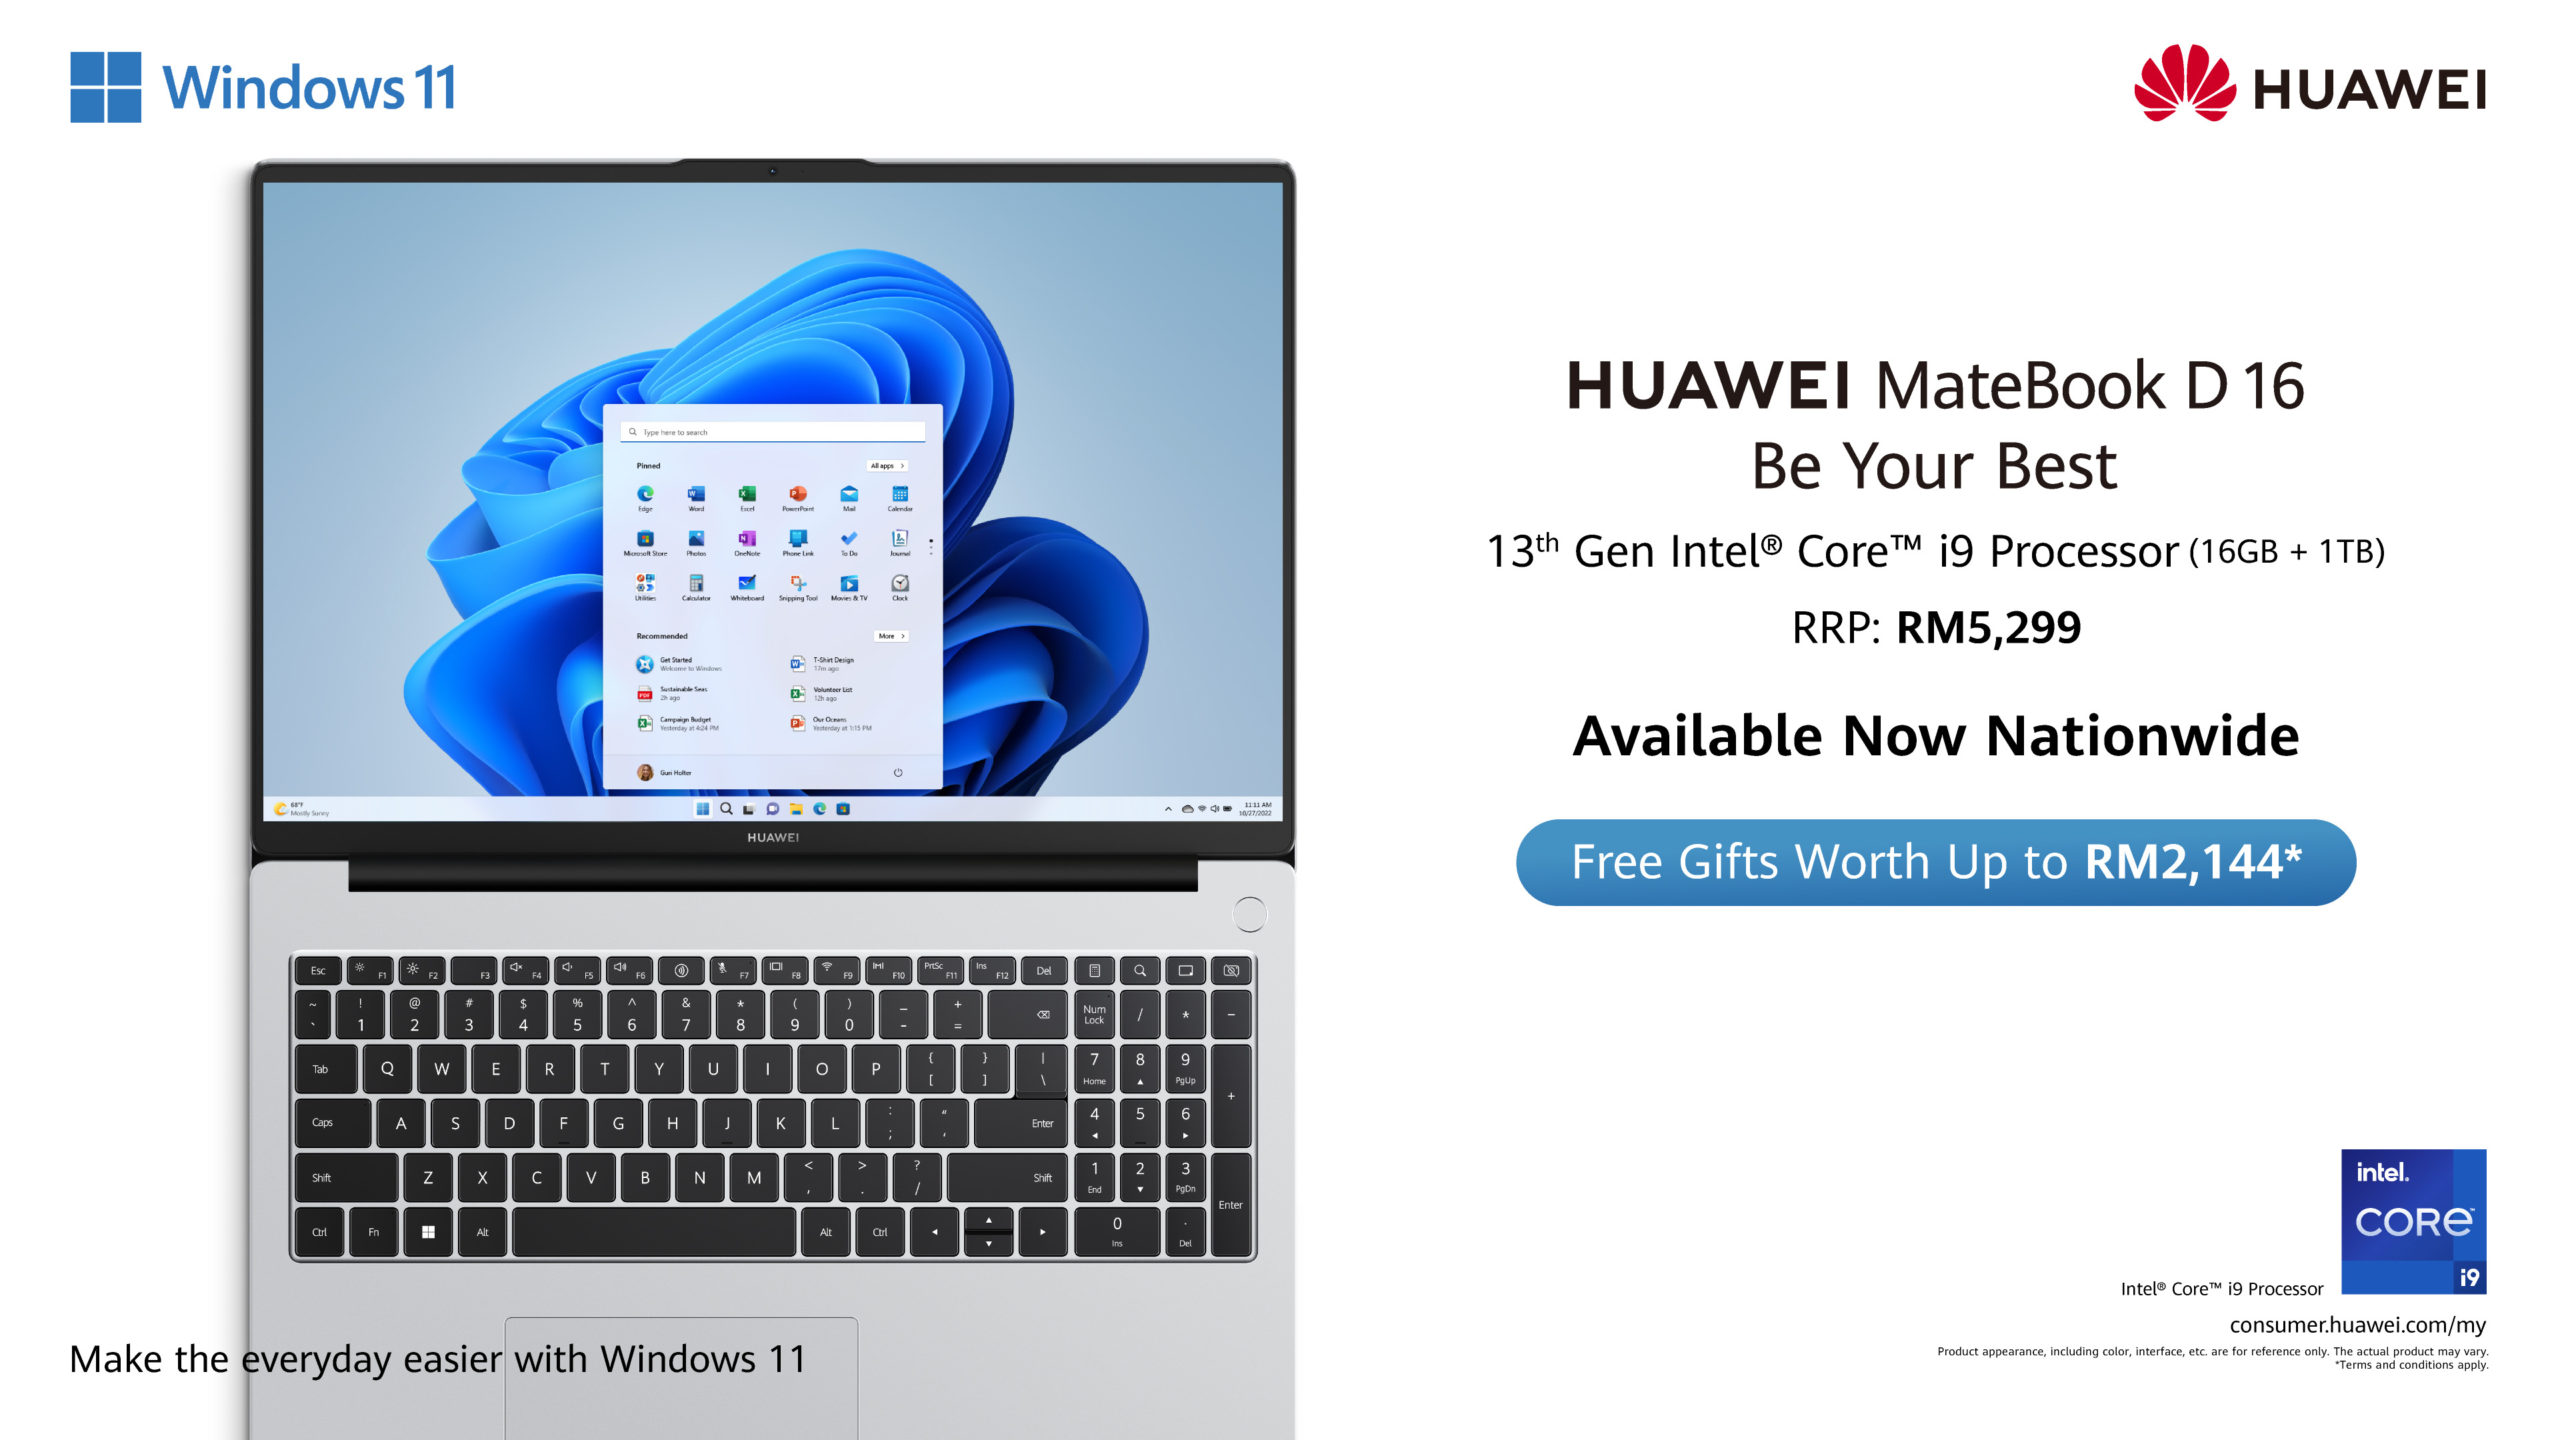 HUAWEI MateBook D 16 kini ditawarkan di Malaysia serentak dengan promosi #FashionforLove 8